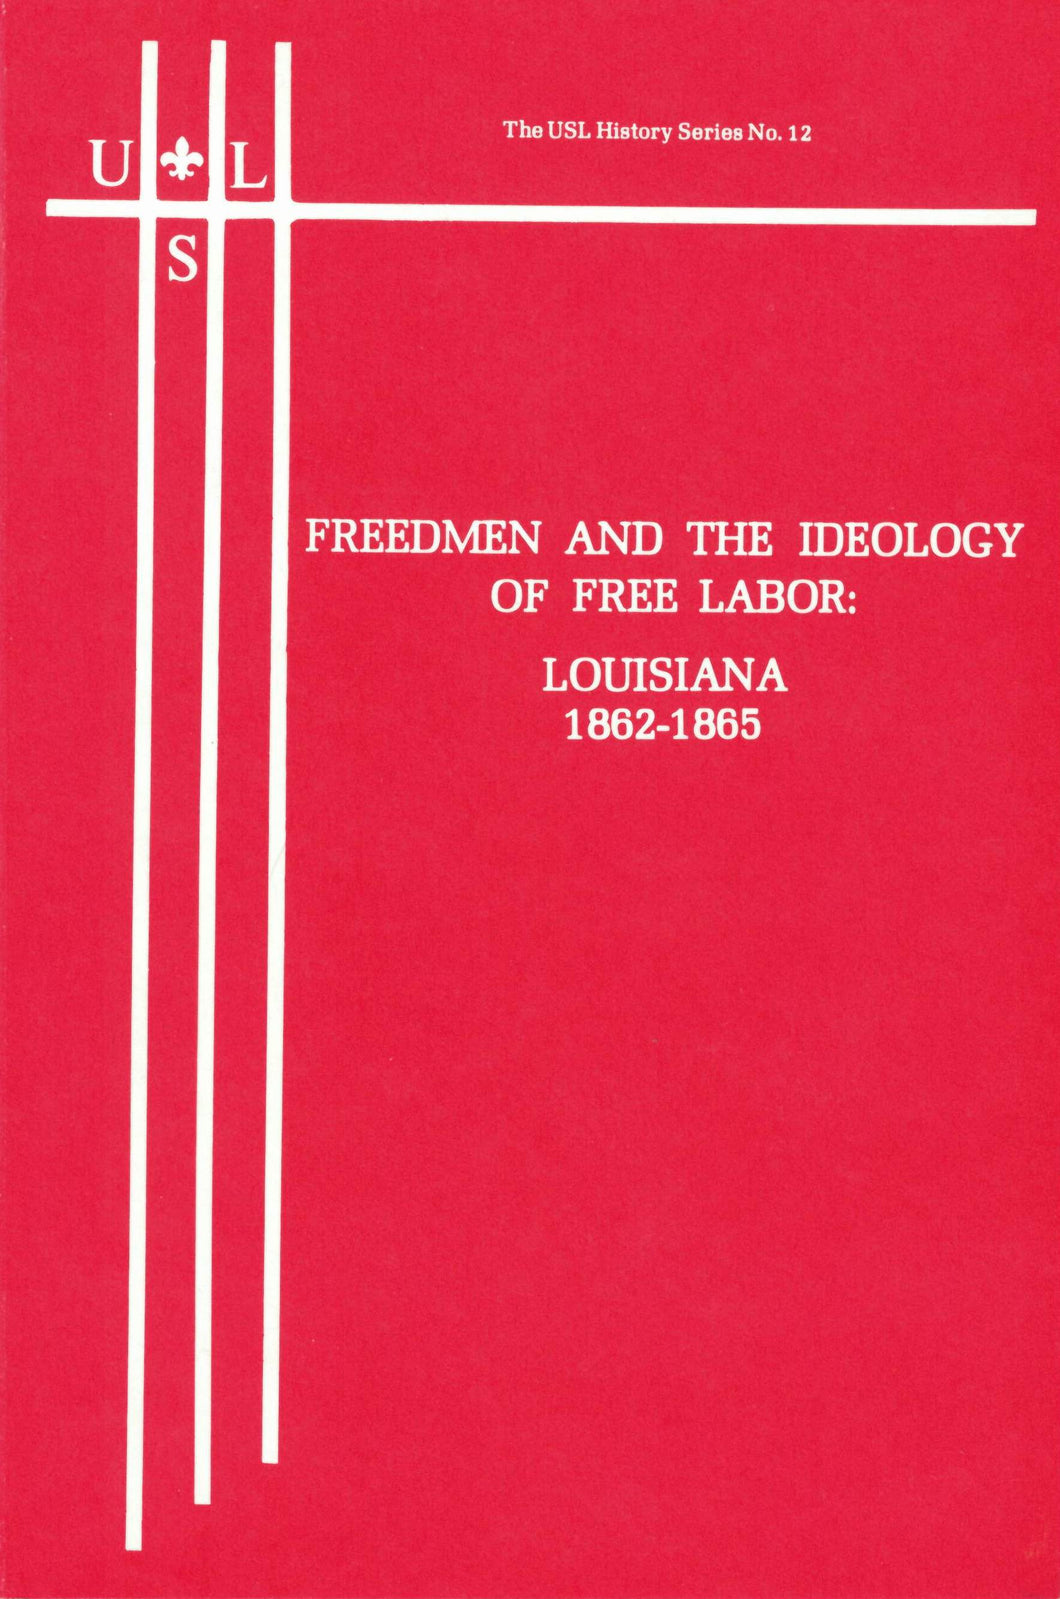 Freedmen and the Ideology of Free Labor: Louisiana 1862-1865